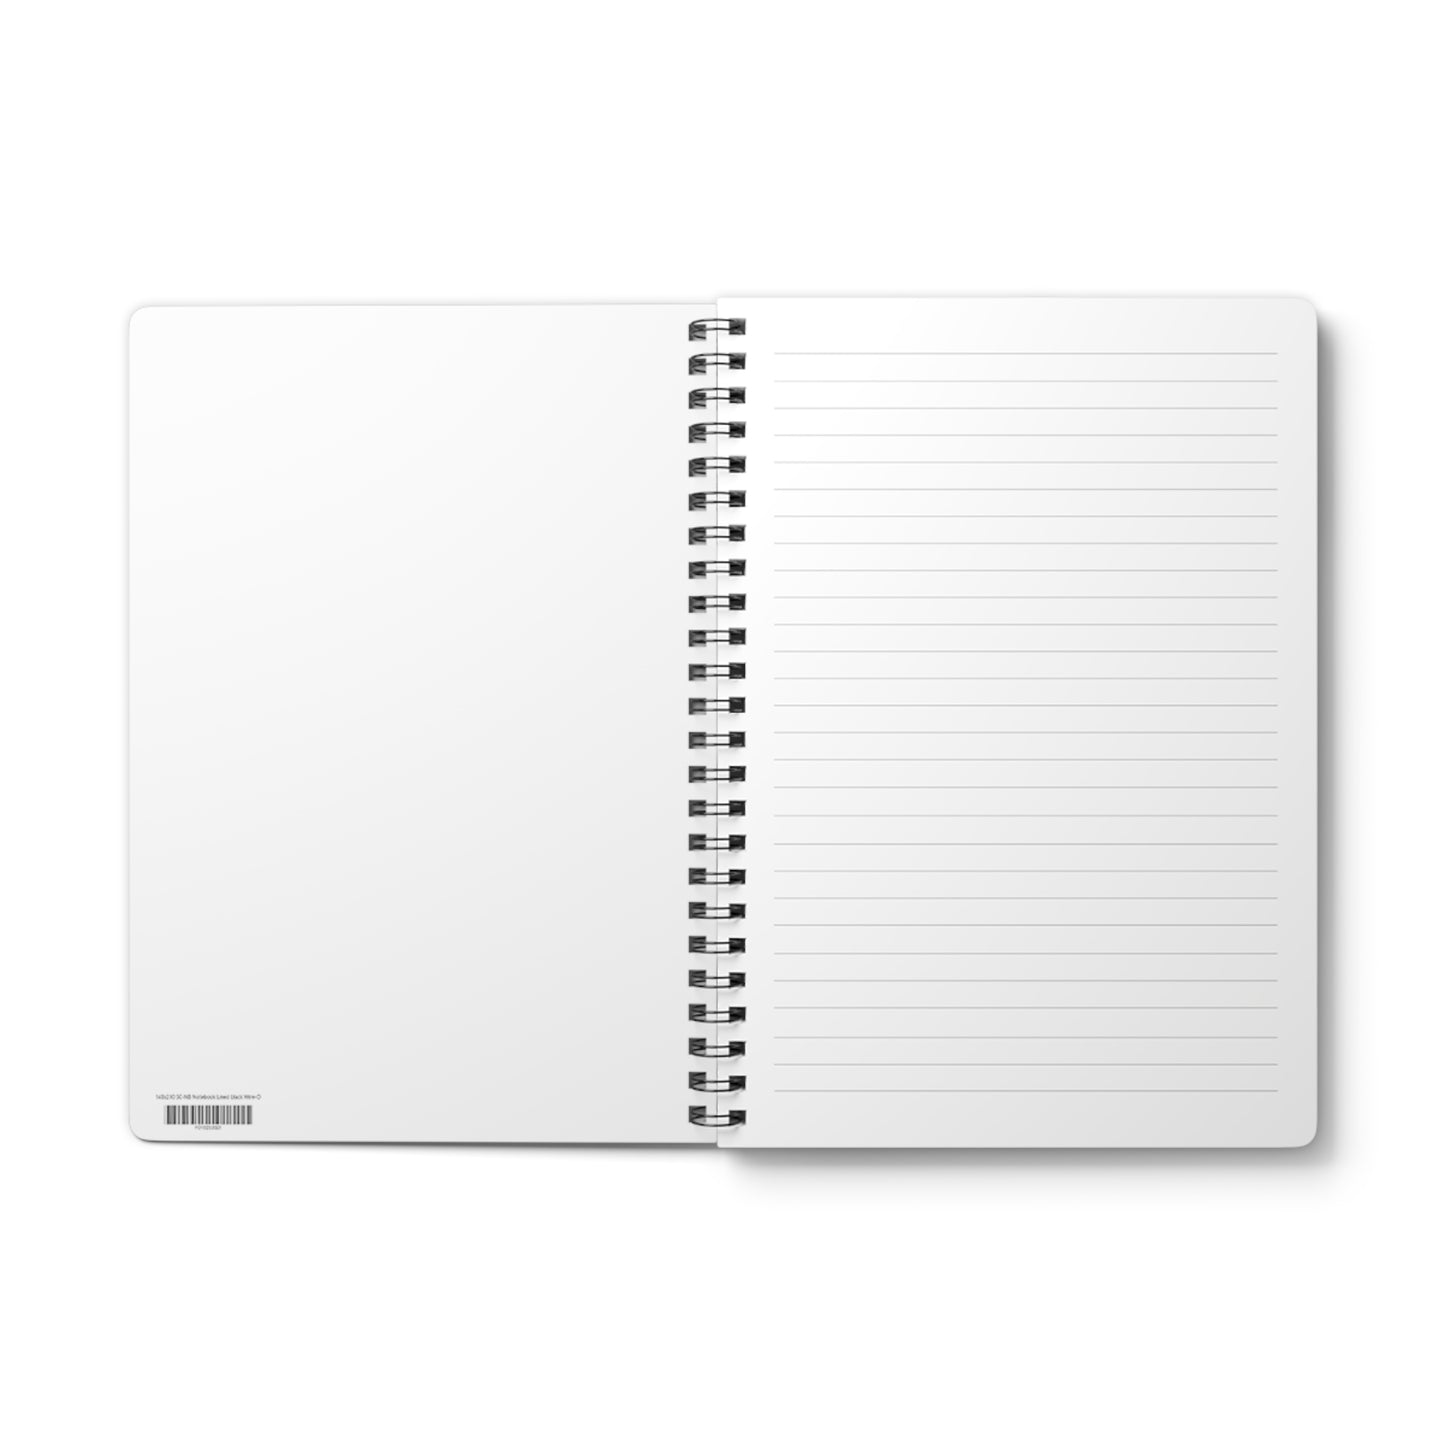 The Keeper - A5 Wirebound Notebook